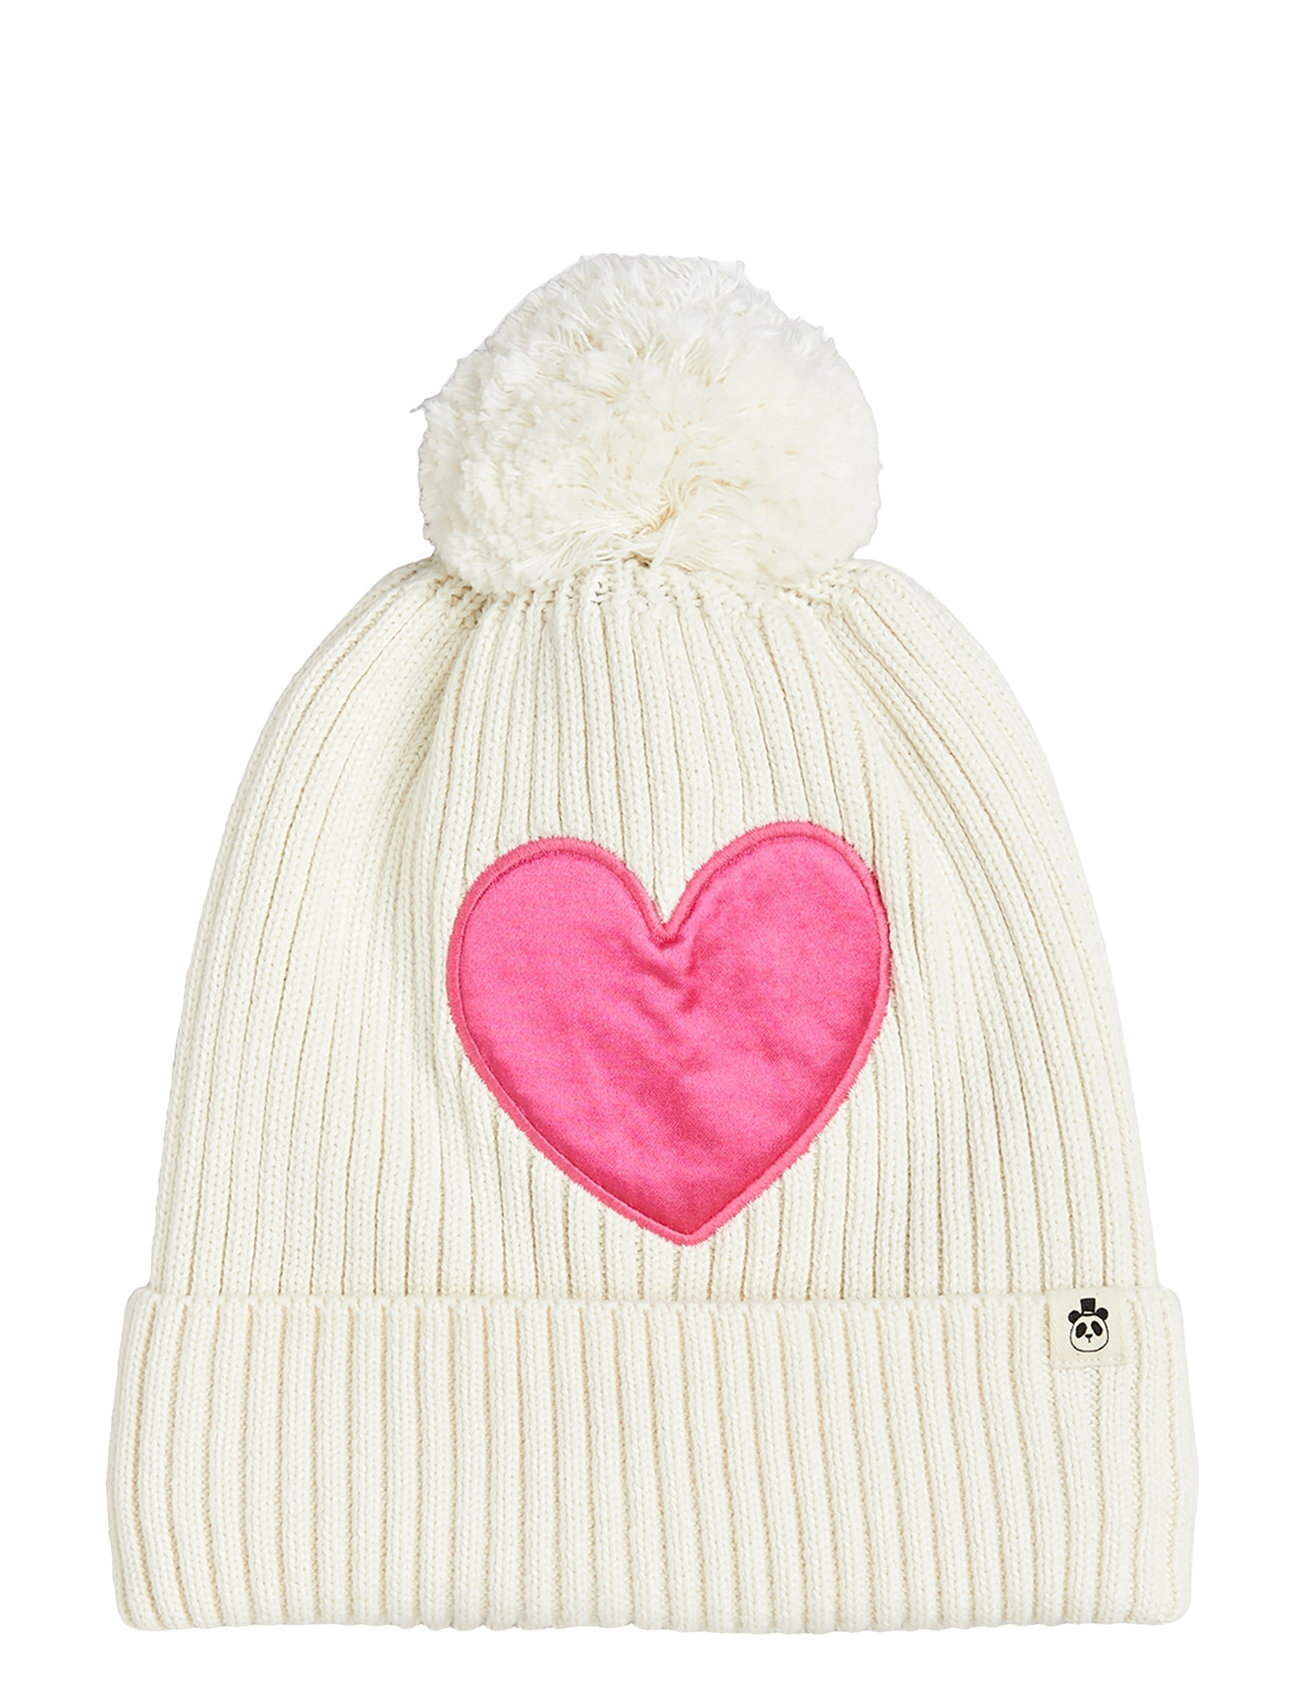 Hearts Knitted Pompom Hat Accessories Headwear Hats Winter Hats Cream Mini Rodini